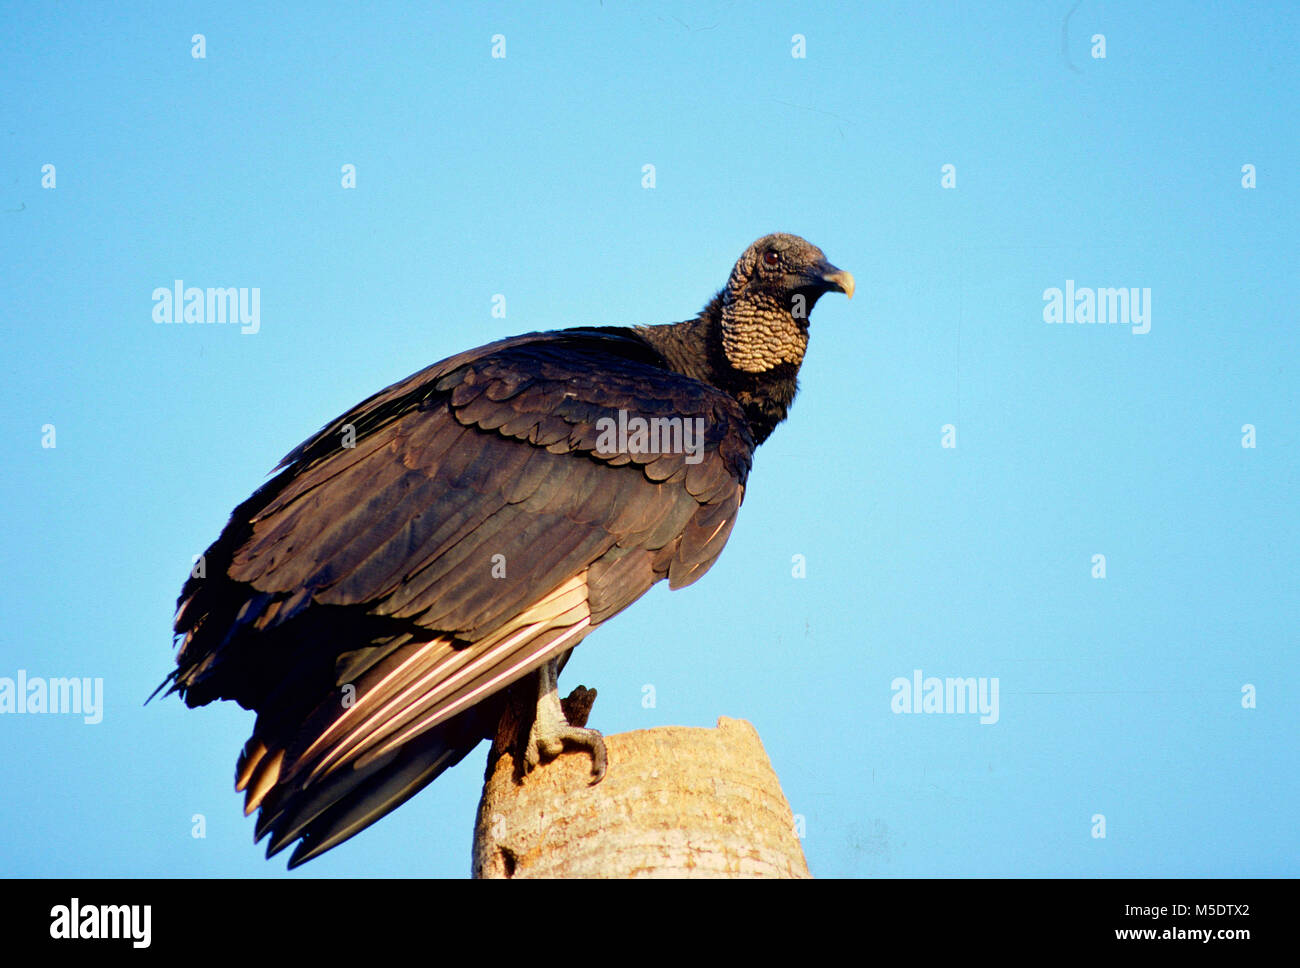 Black vulture, Coragyps atratus, Cathartidae, Vulture, bird of prey, bird, animal, Everglades National Park, Florida, USA Stock Photo